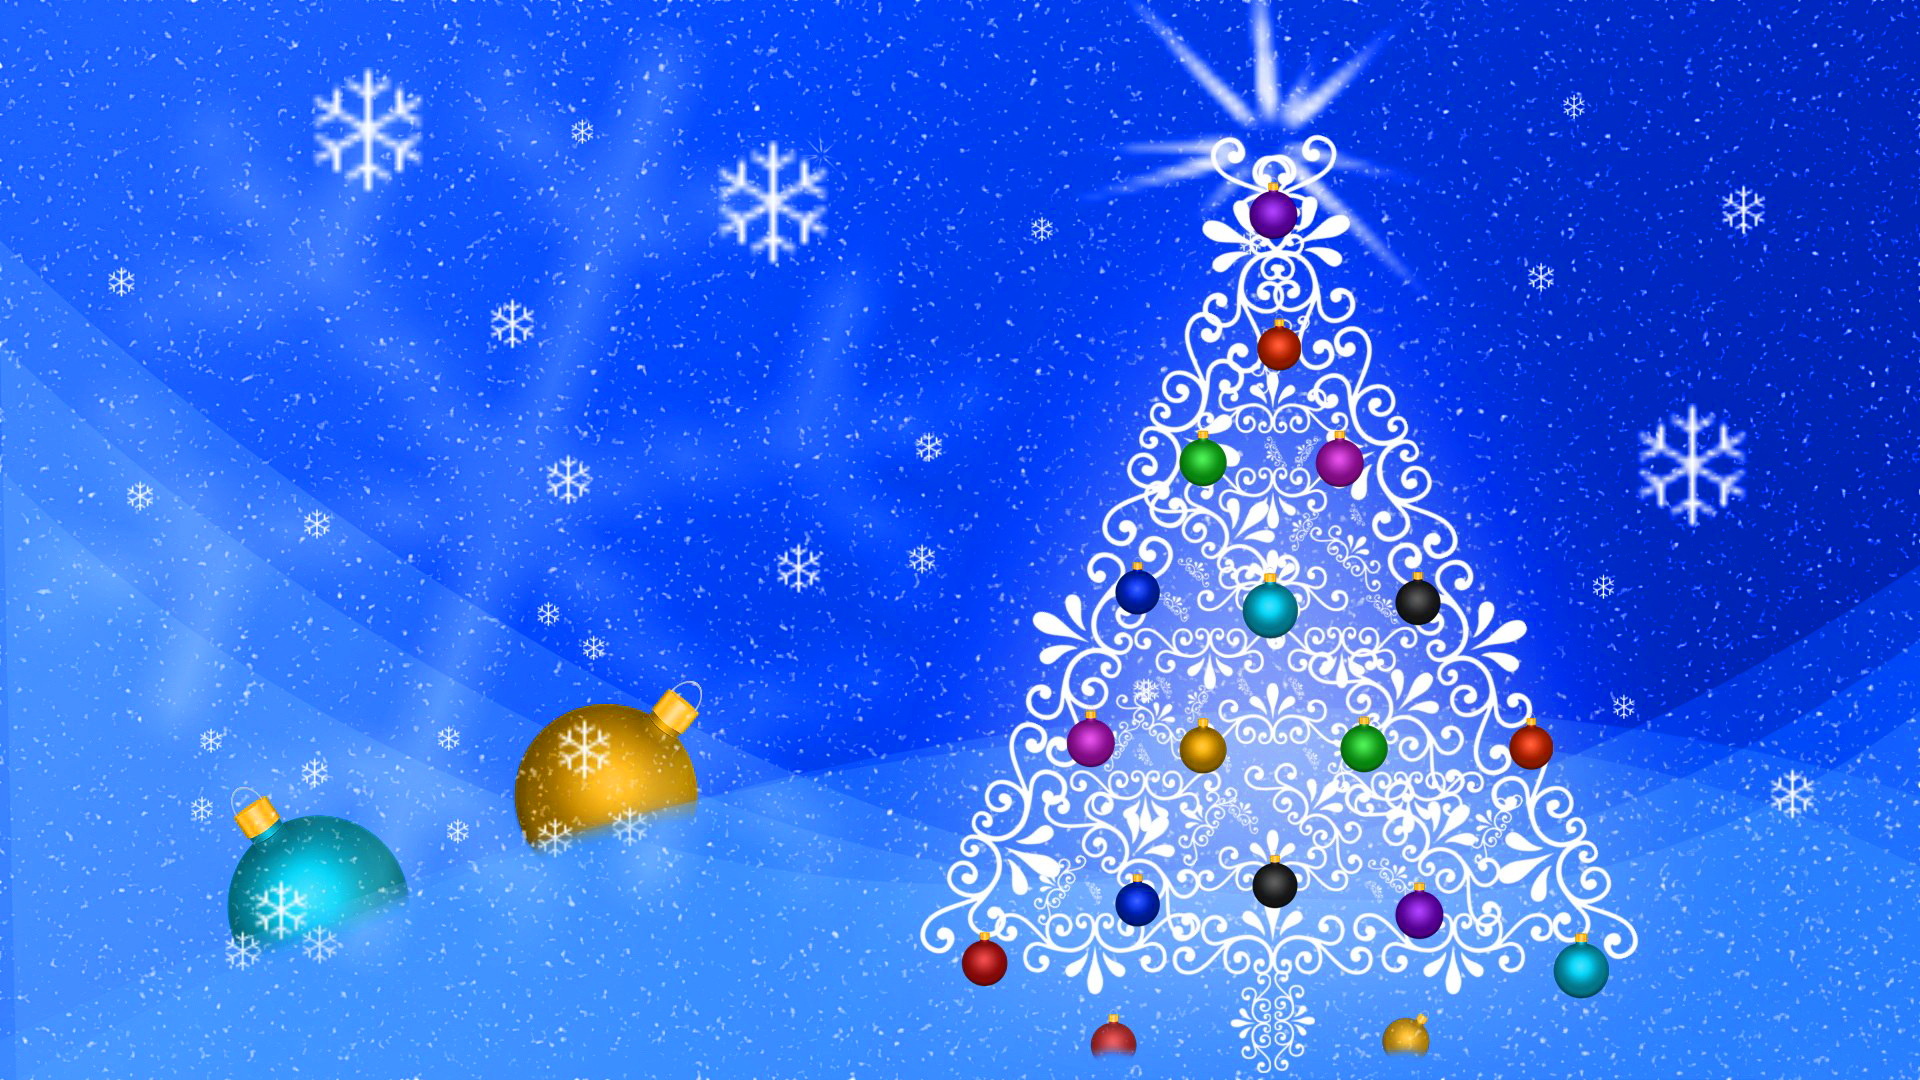 Animated Christmas Tree Desktop Wallpaper